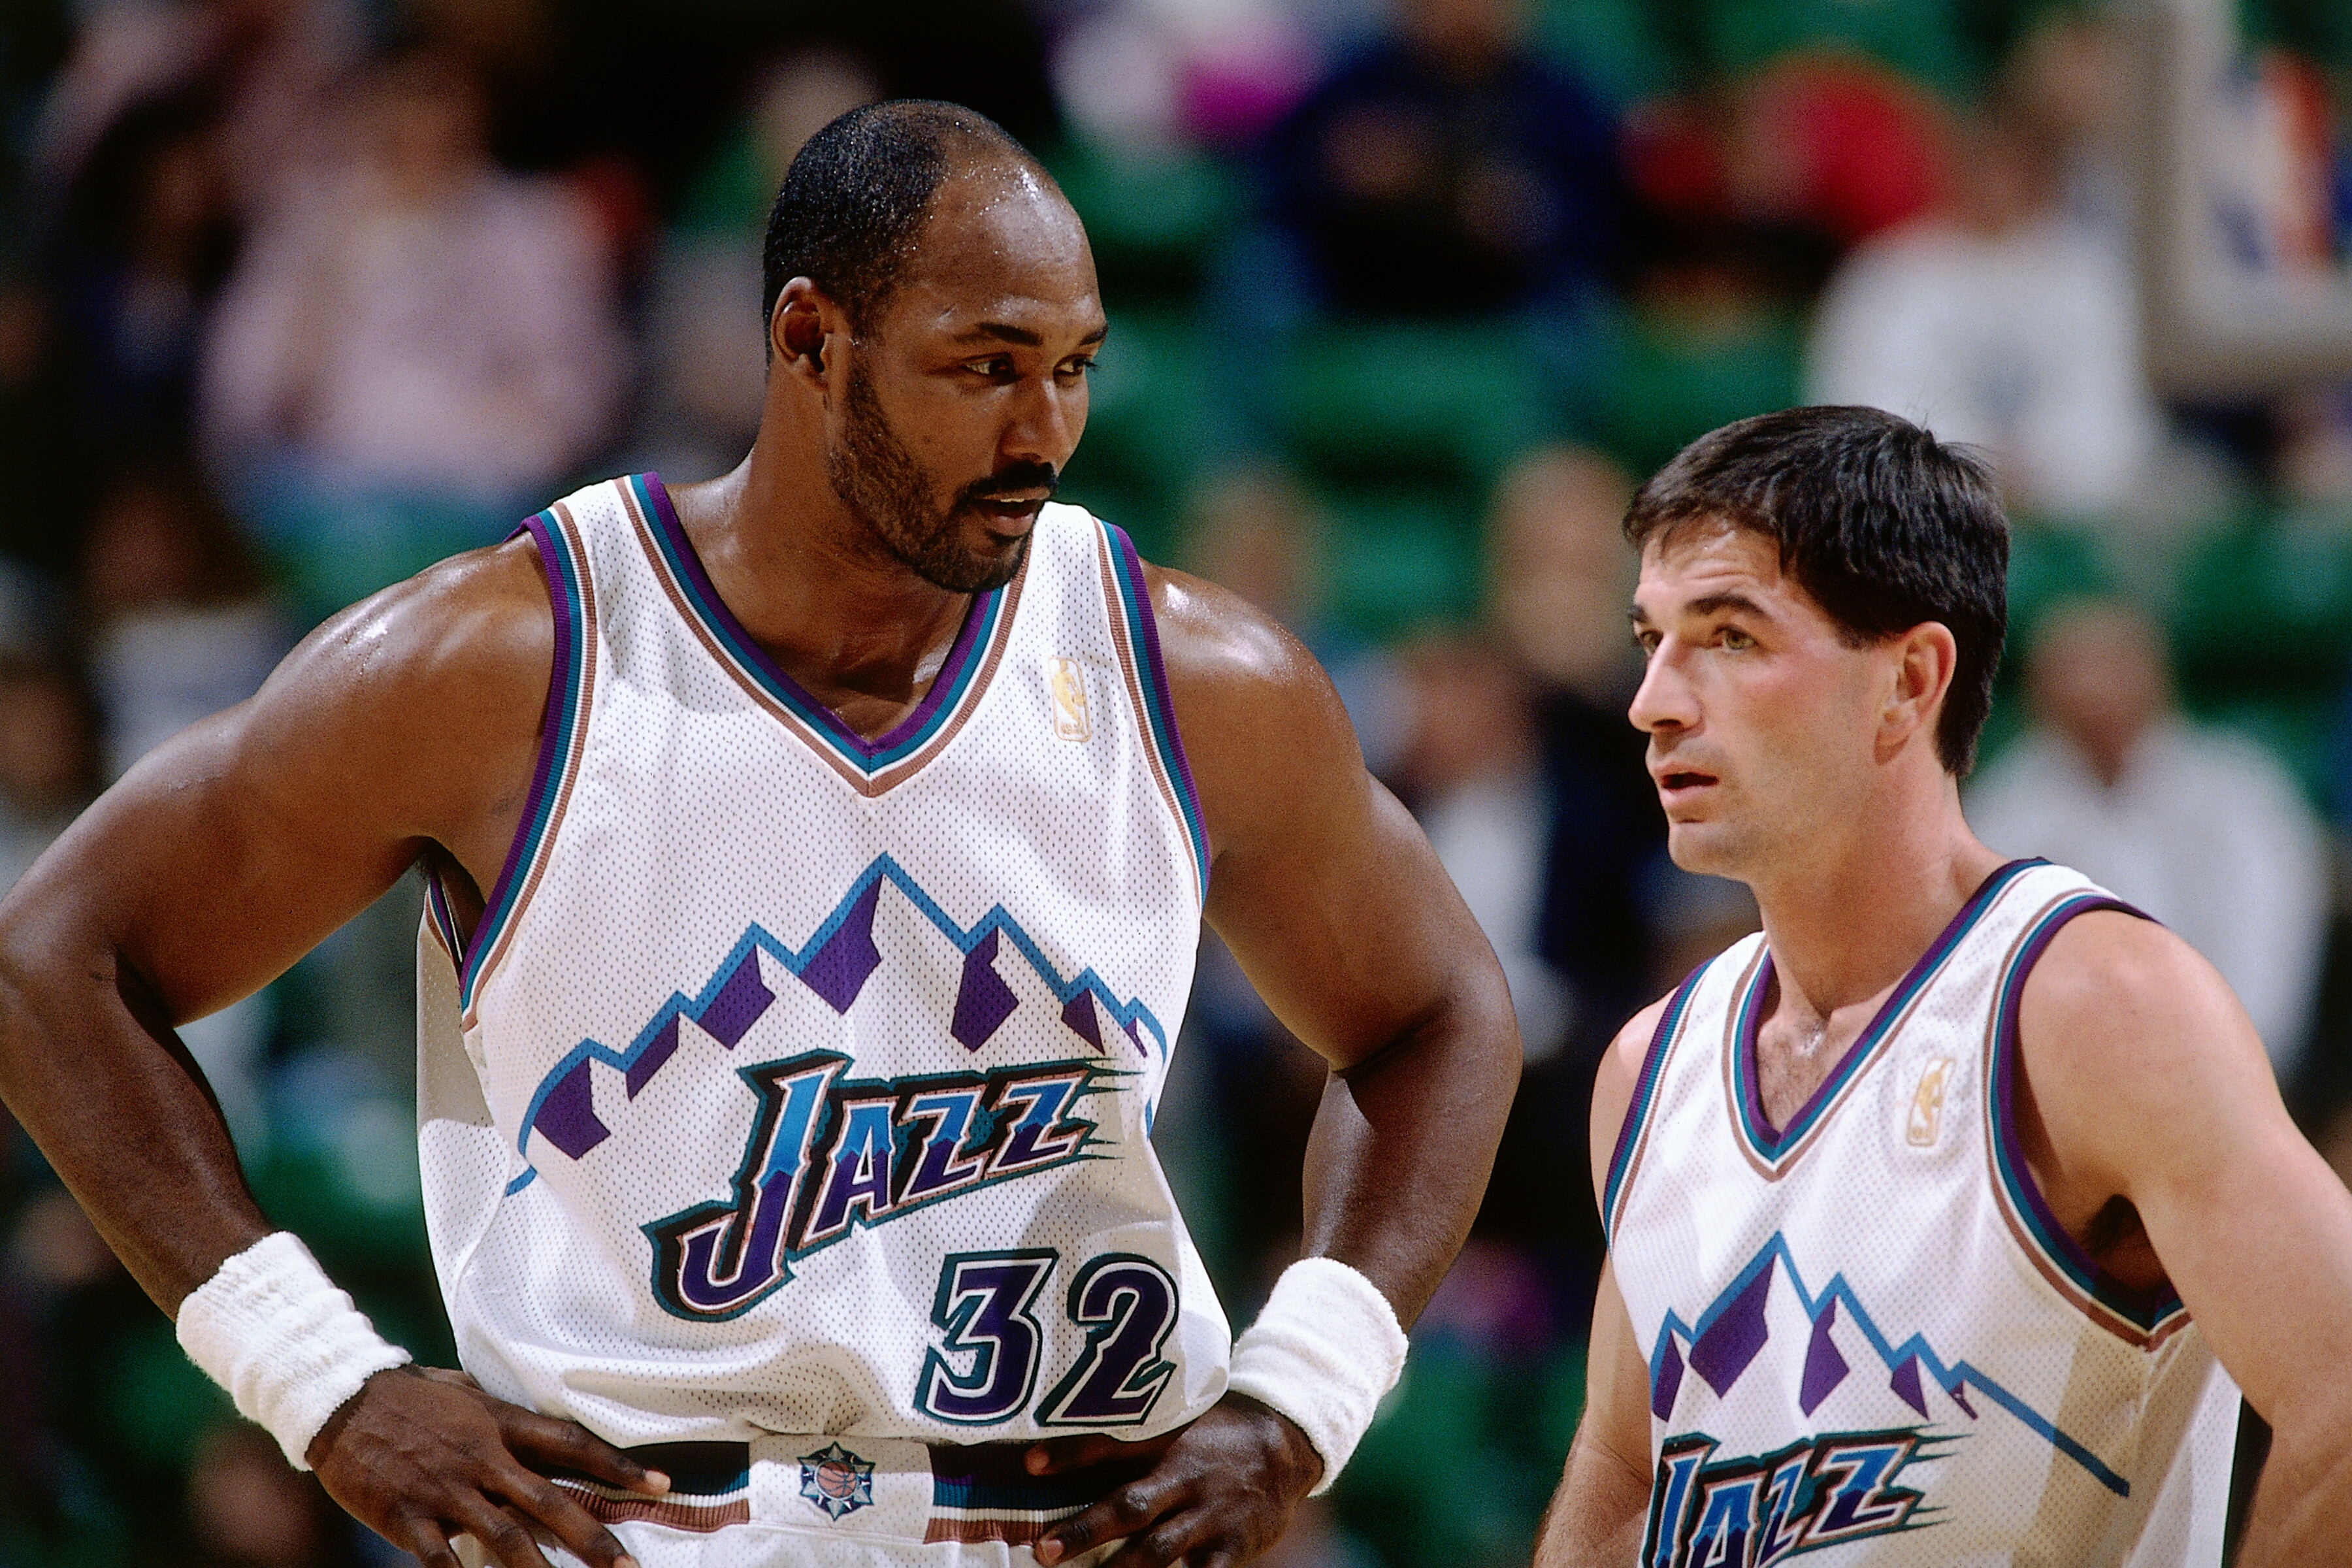 Utah Jazz greats Karl Malone and John Stockton talk during an NBA game in 1997